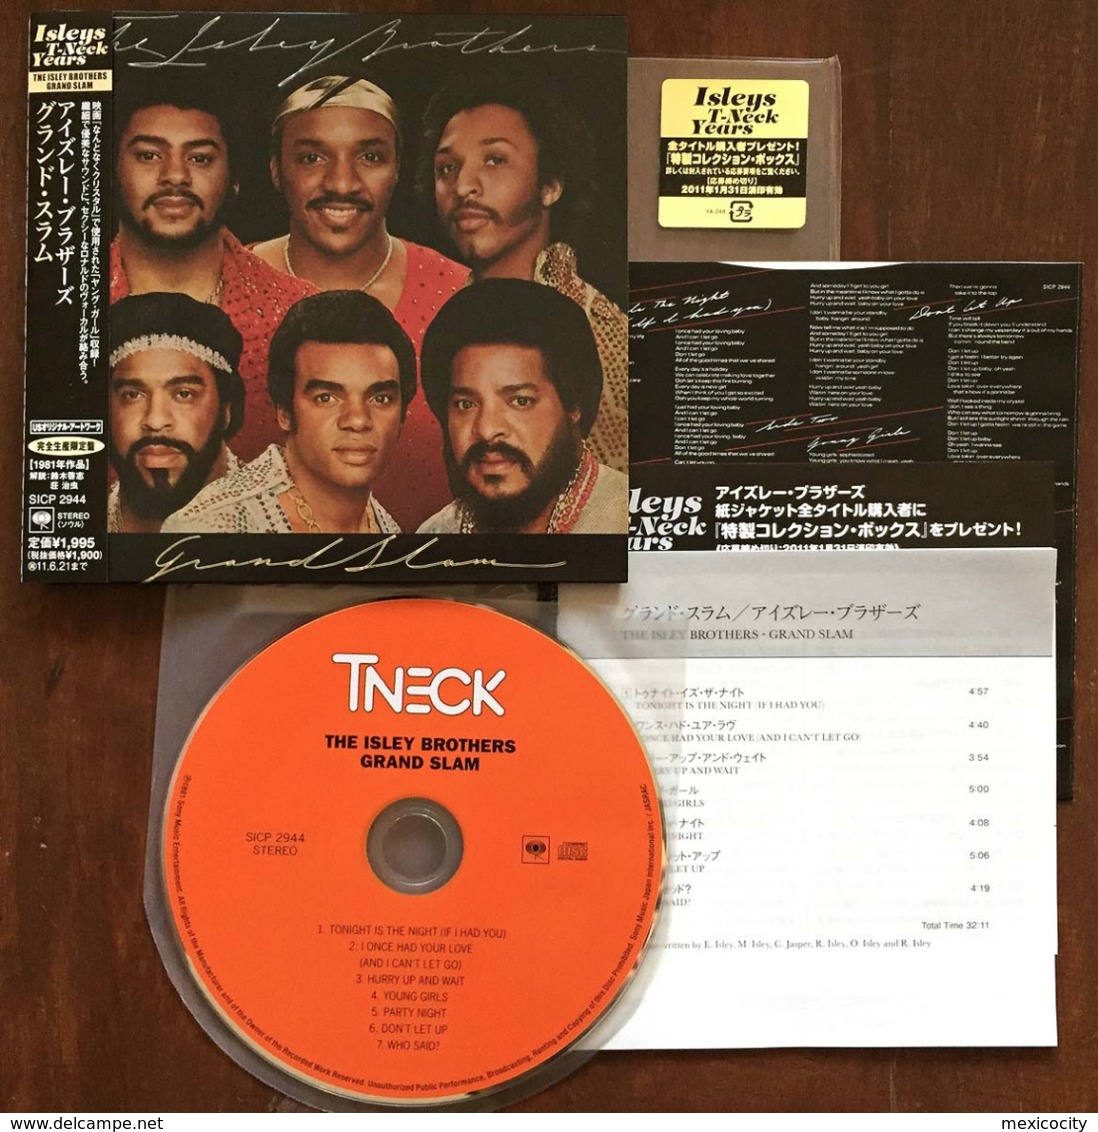 THE ISLEY BROTHERS GRAND SLAM Japanese CD Mini Sleeve W/ Inserts Sony Japan See Imgs. SICP-2944 Rare - Soul - R&B